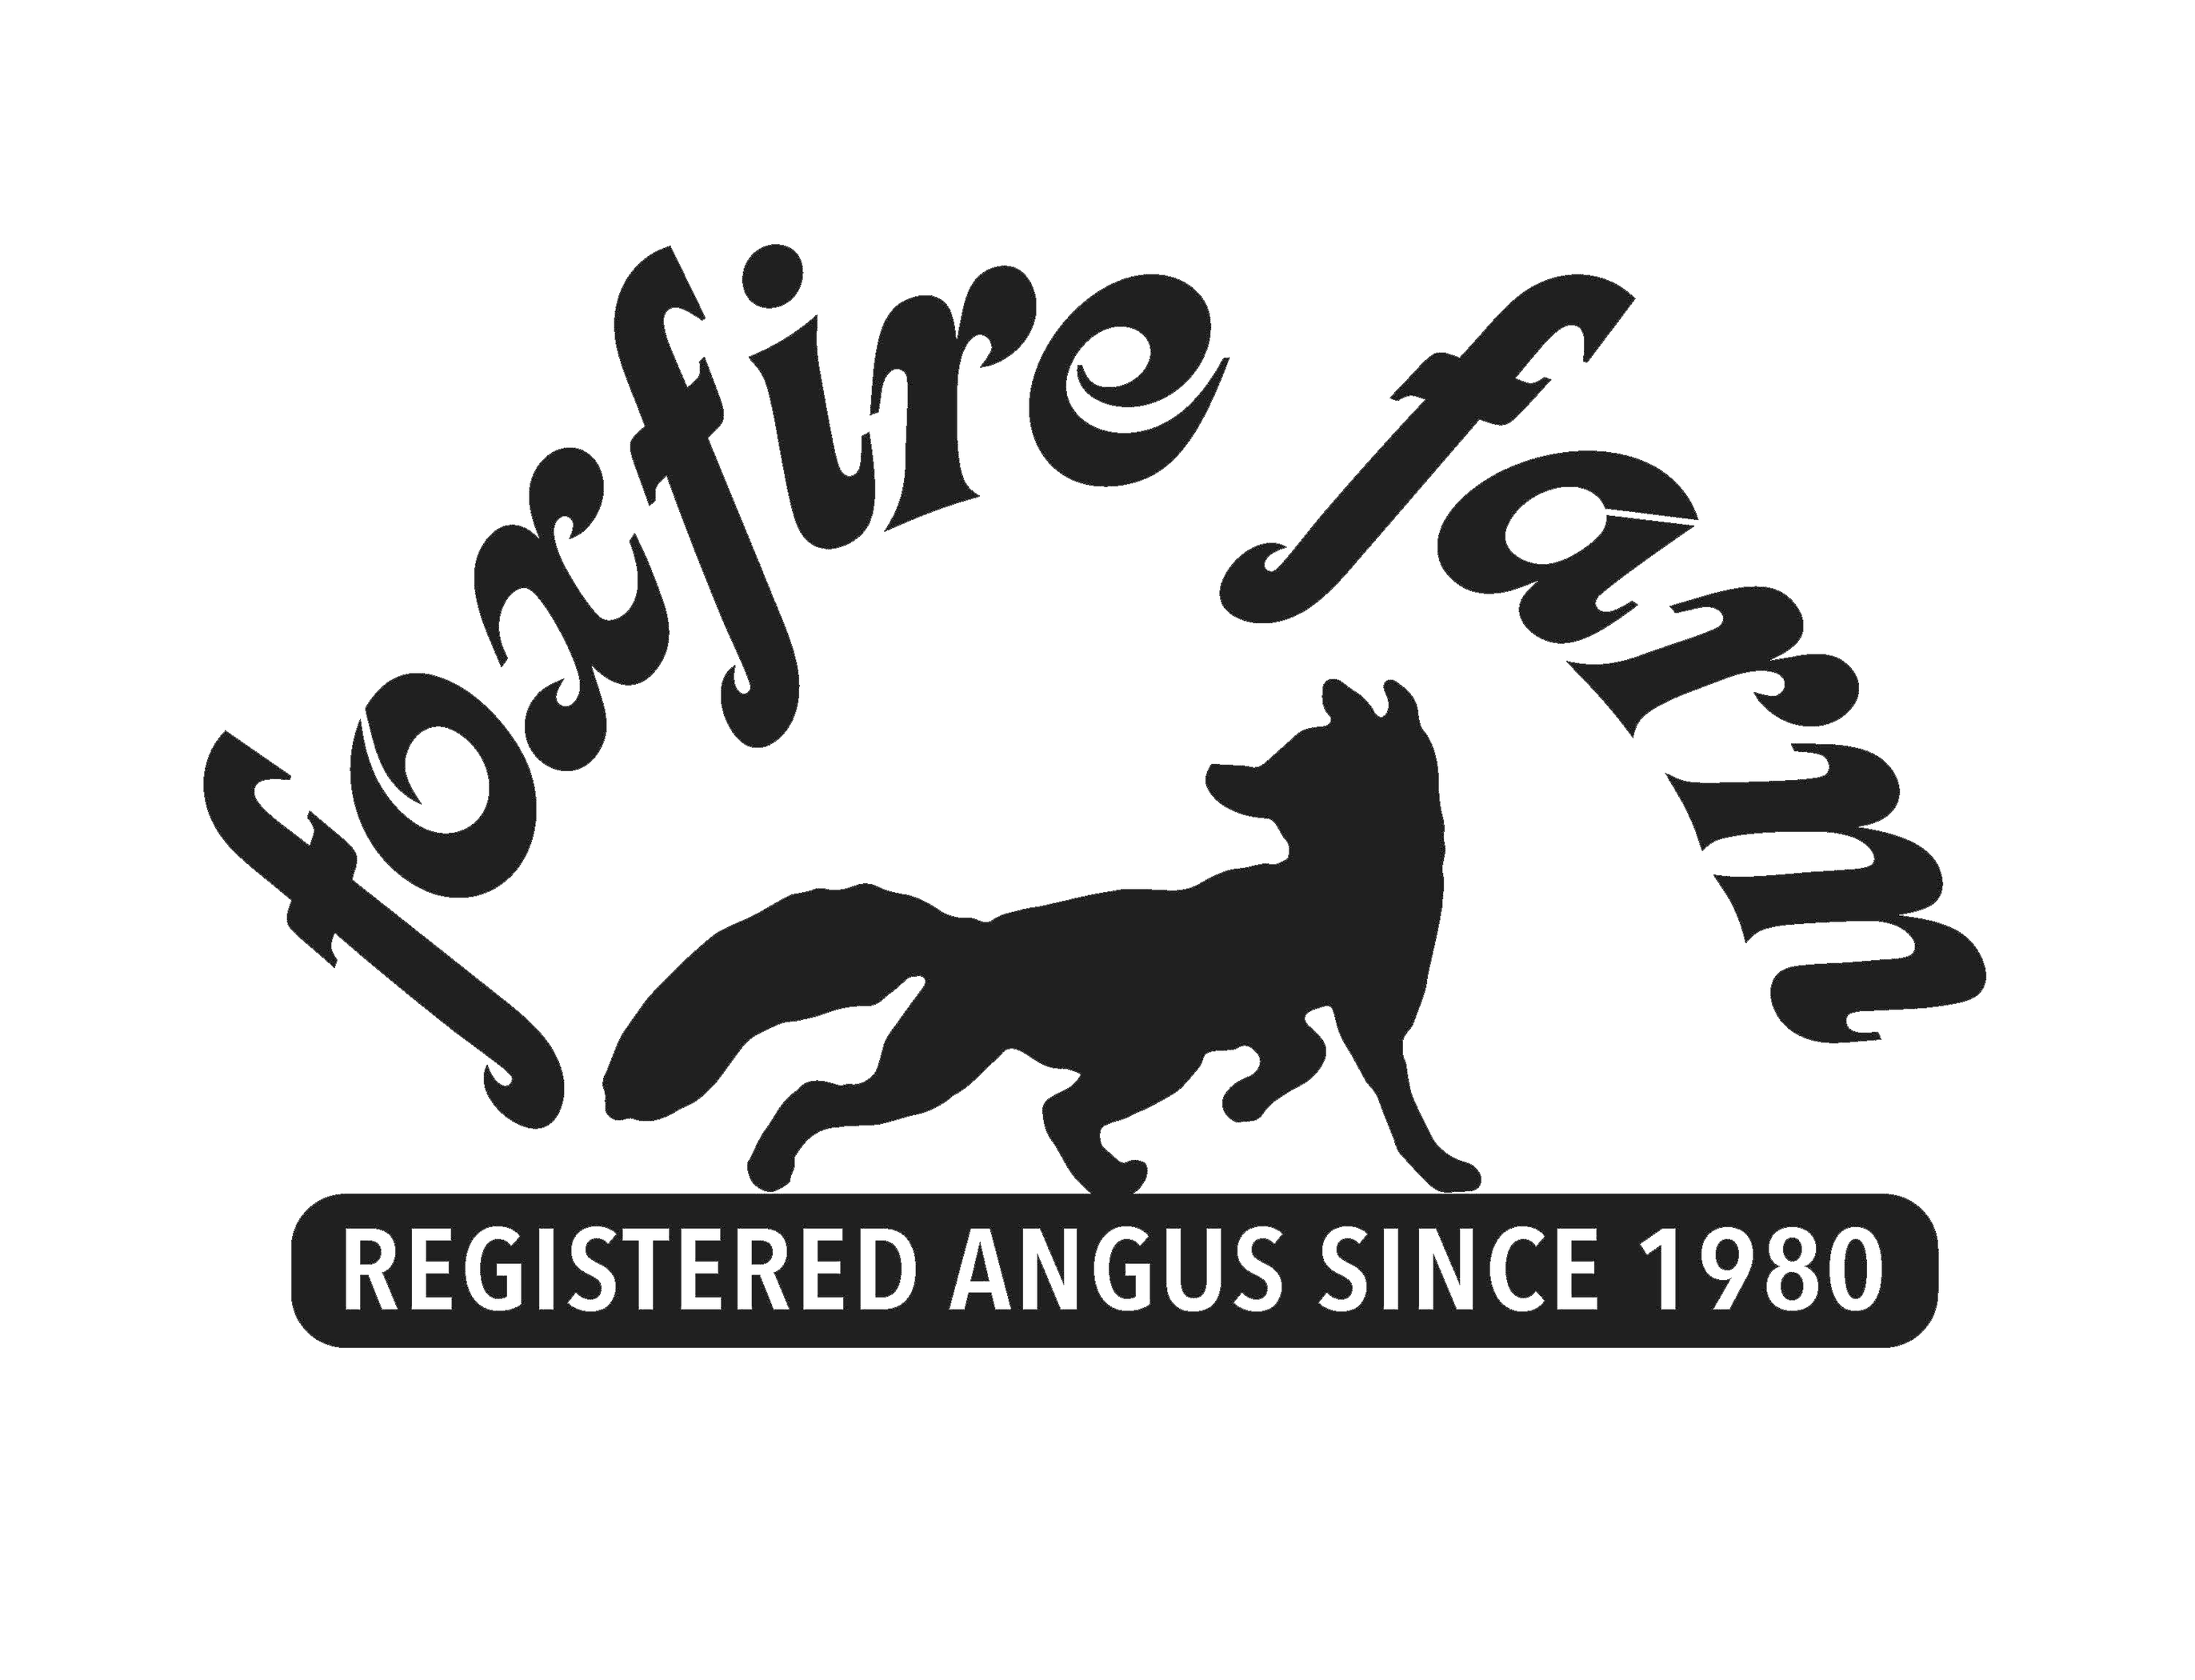 FoxFire Farm Angus Washington Pike Avella PA Logo